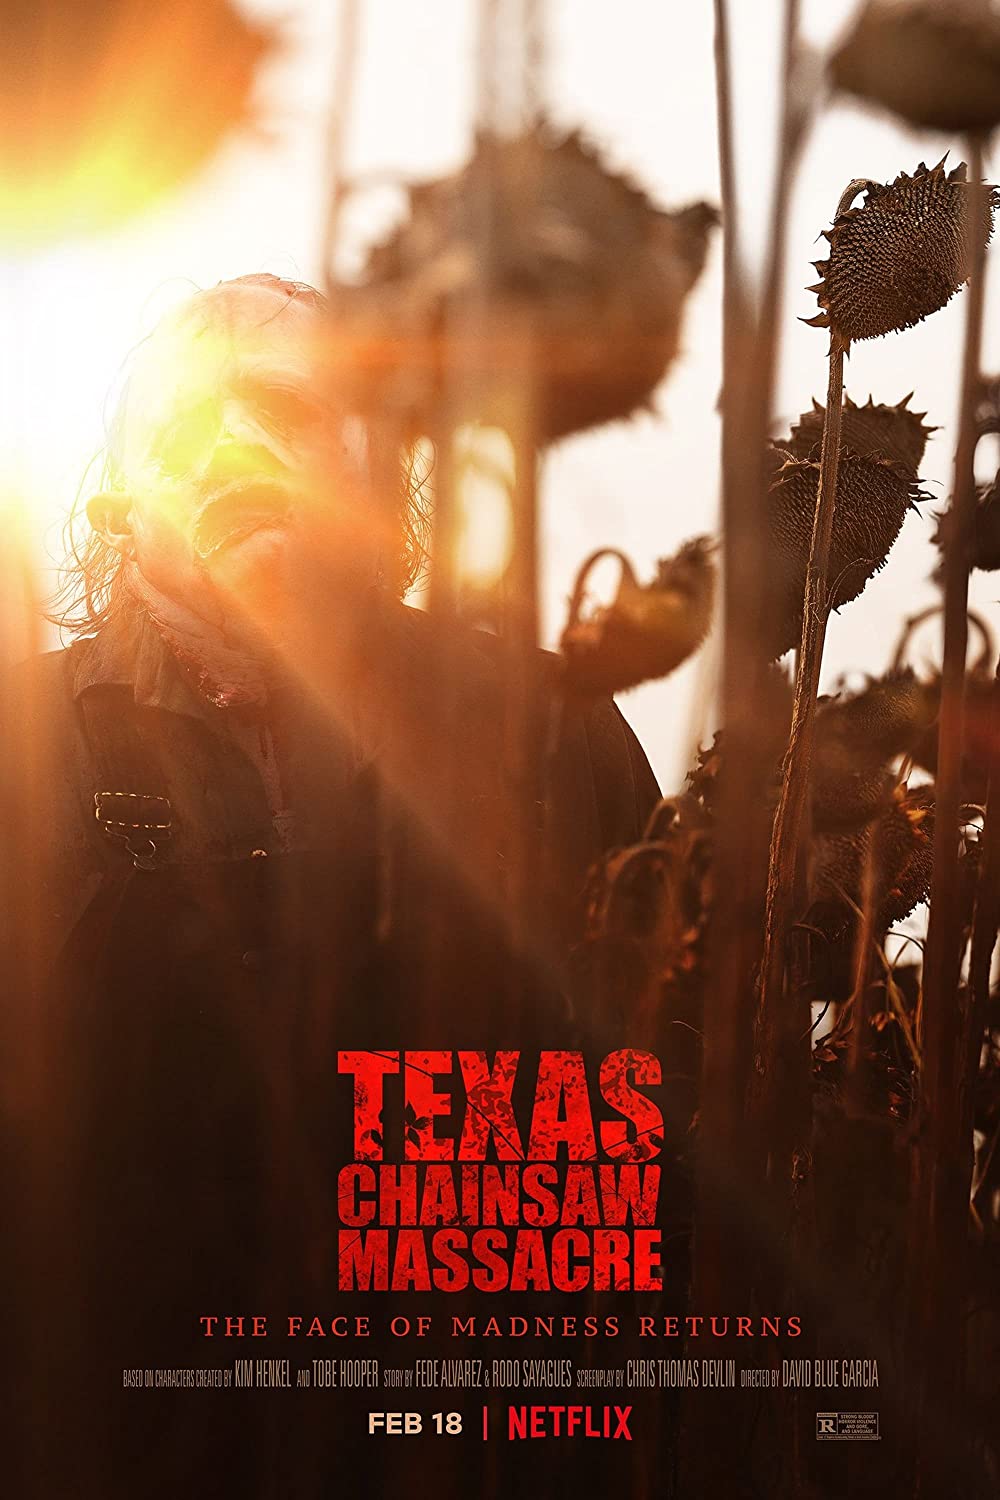 Filmbeschreibung zu Texas Chainsaw Massacre (1974)